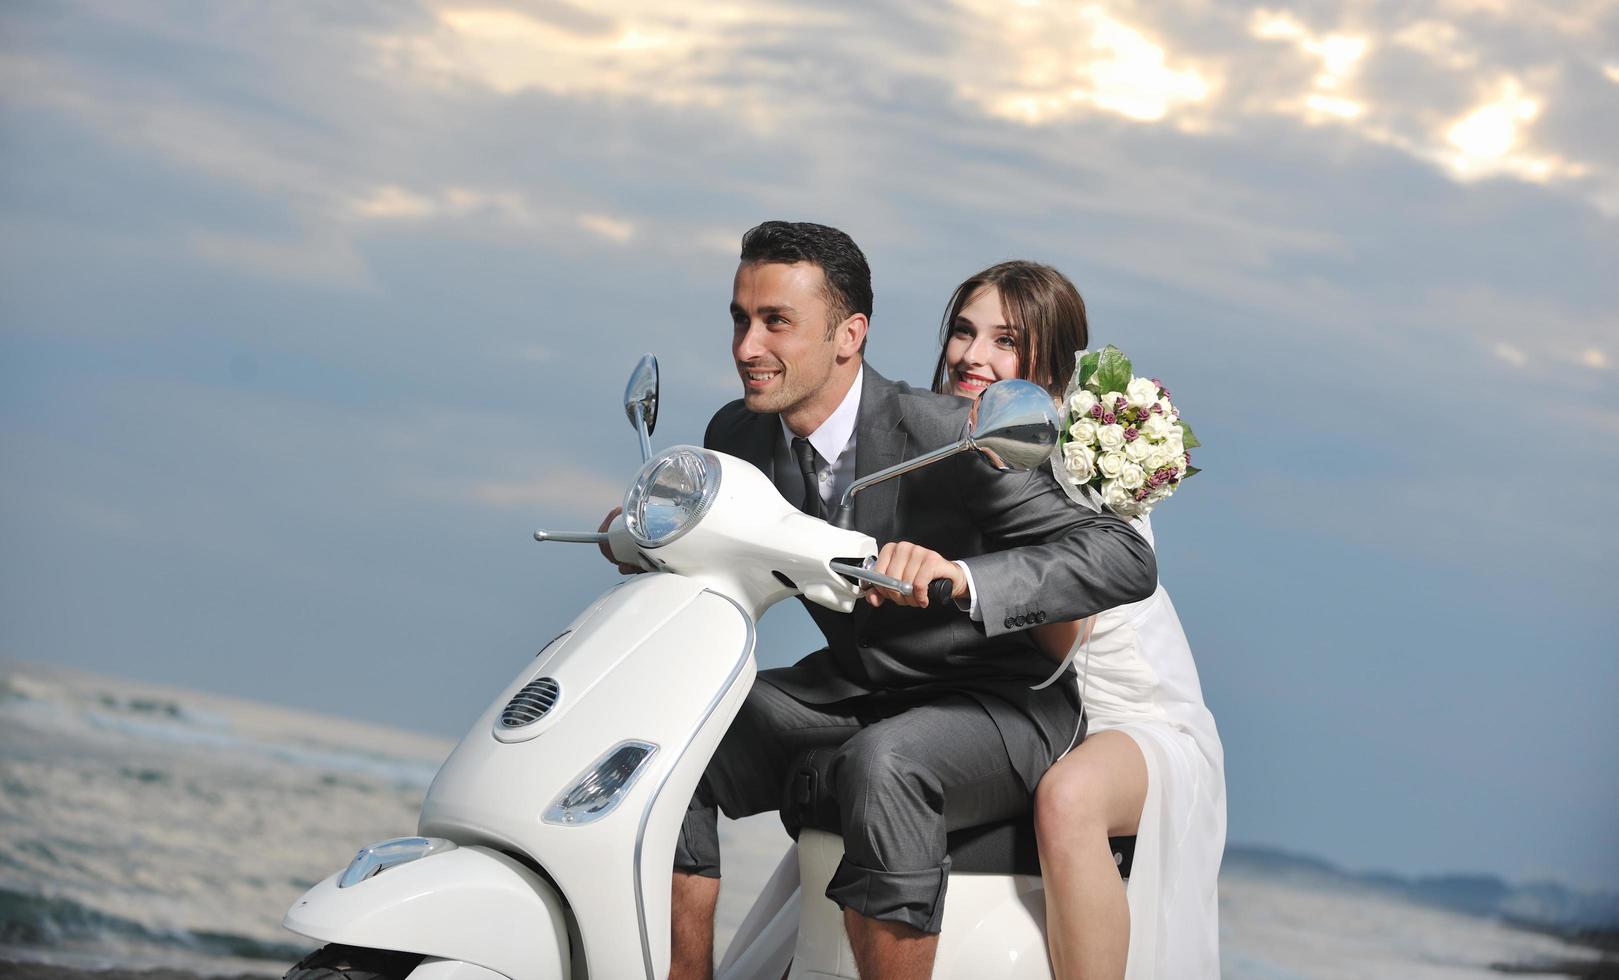 casal recém casado na praia anda de scooter branca foto